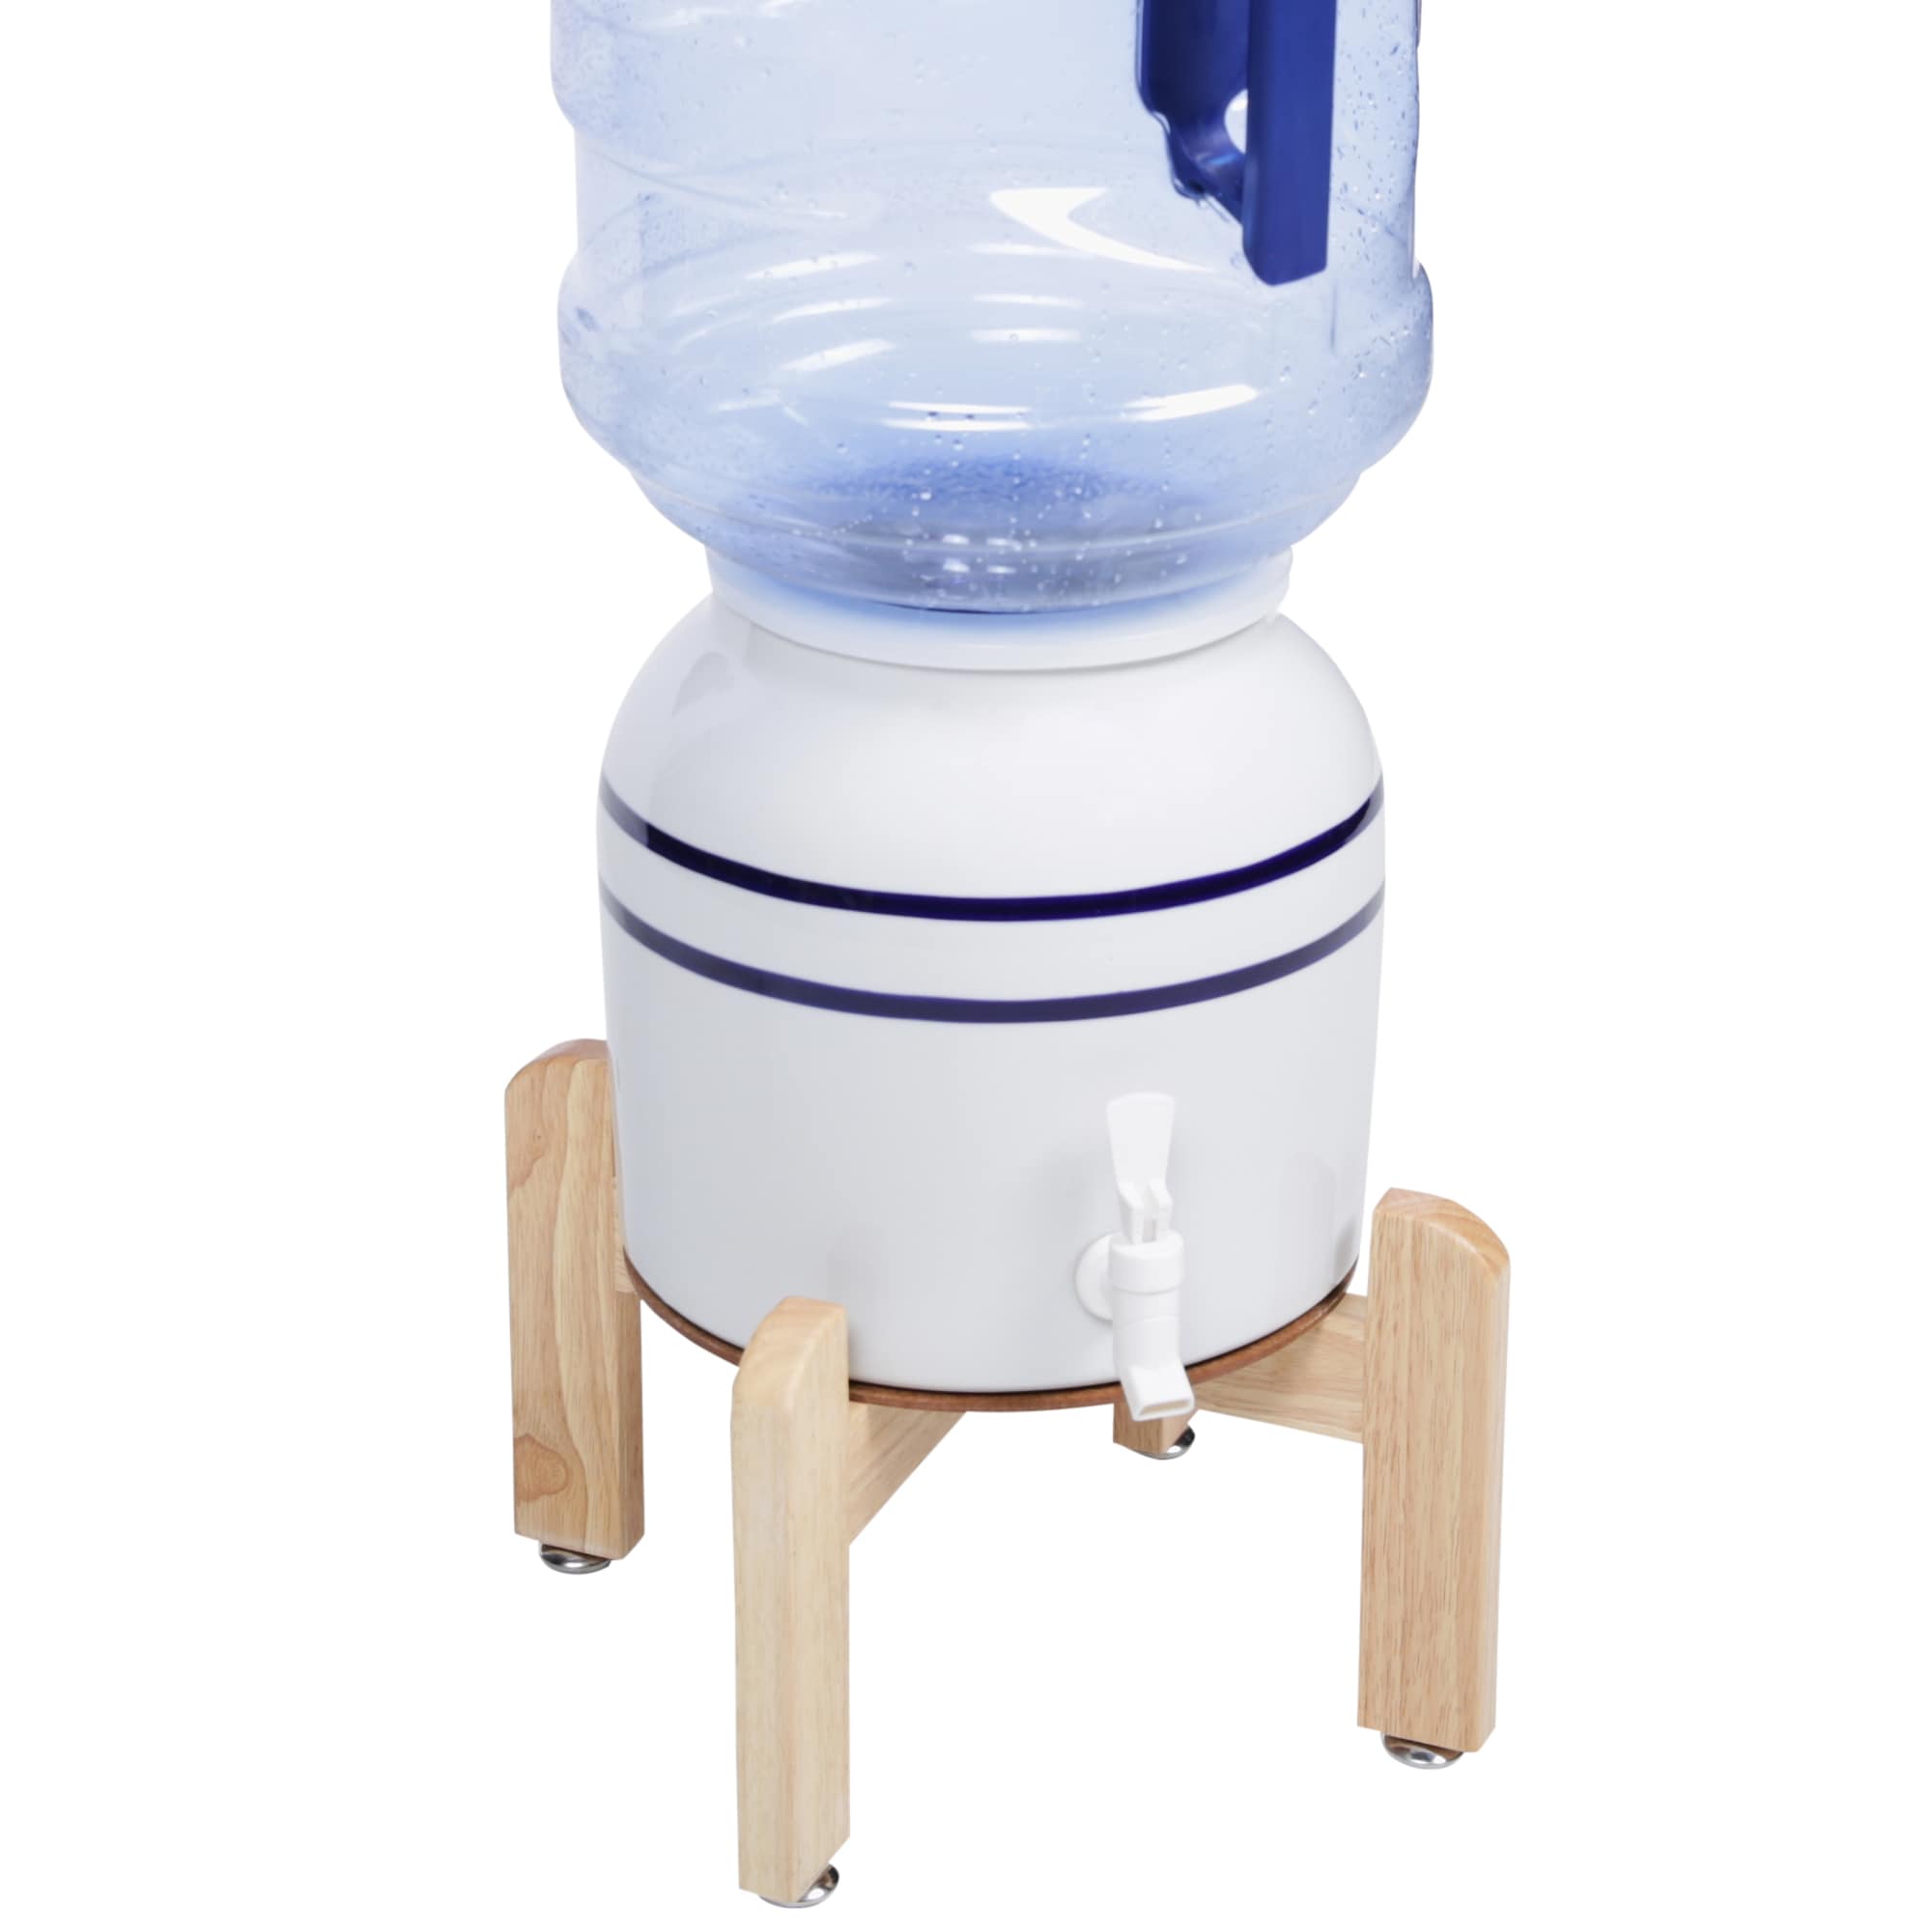 Primo Countertop Ceramic Water Dispenser, Primo Water